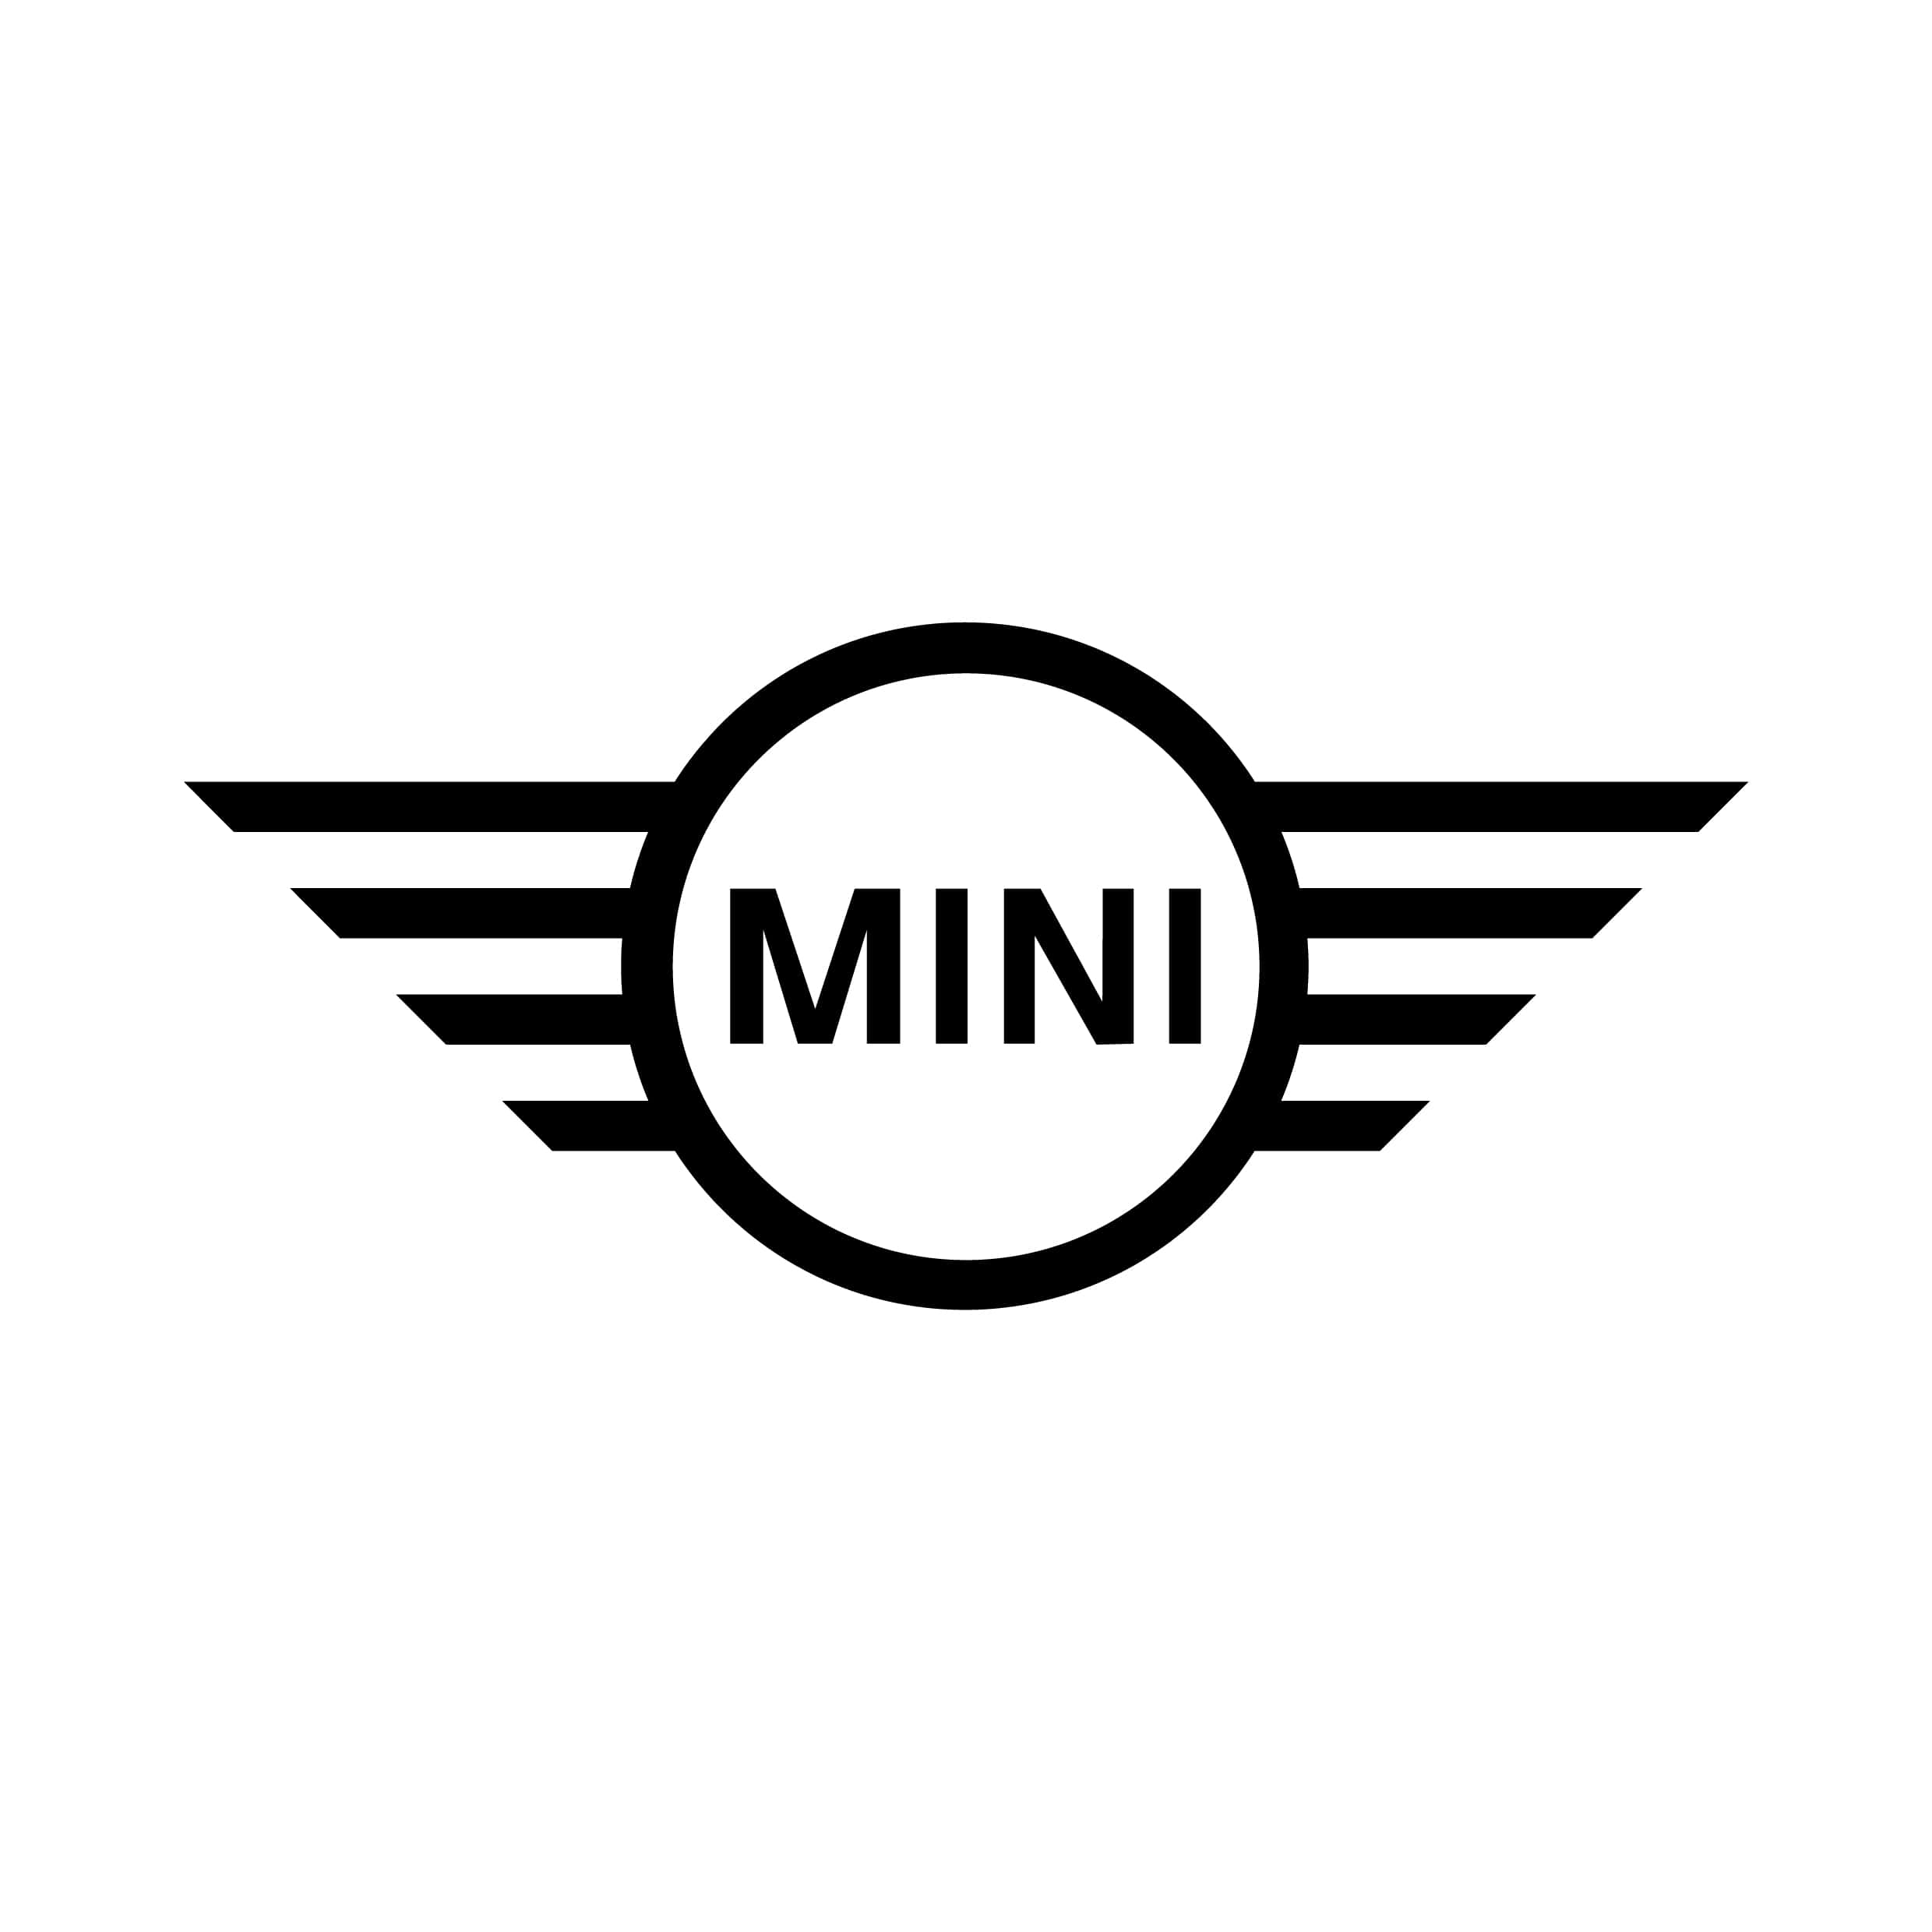 https://media.cdnws.com/_i/46016/4532/3053/32/stickers-mini-ref7-bmw-autocollant-voiture-sticker-auto-autocollants-decals-sponsors-racing-tuning-sport-logo-min.jpeg